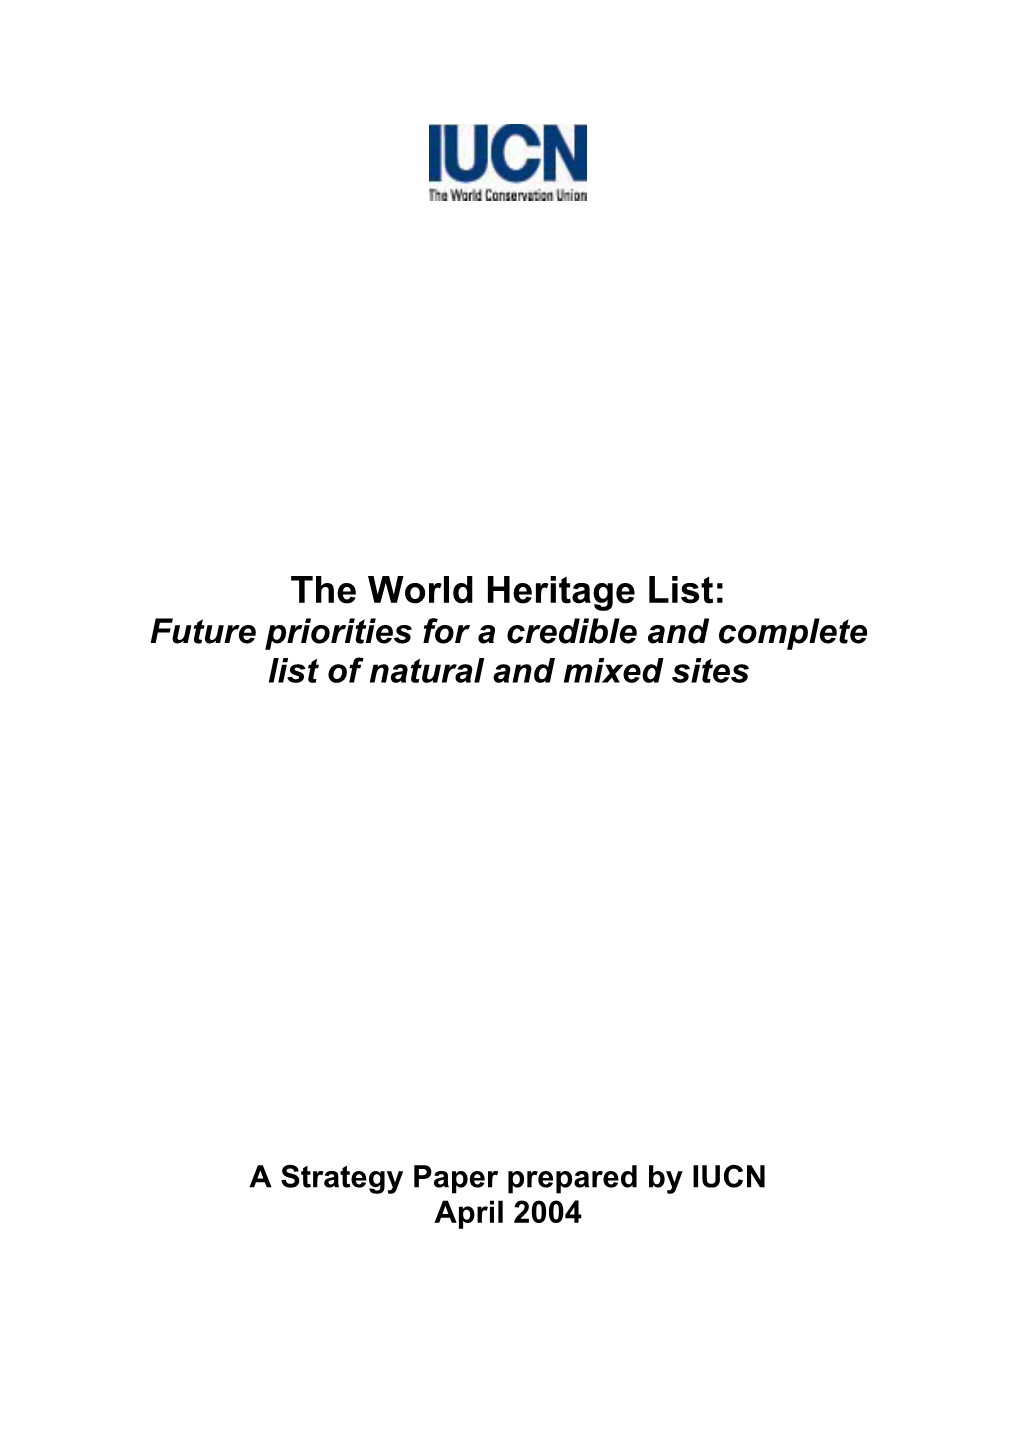 Global World Heritage Network: Biogeography, Habitats and Biodiversity”